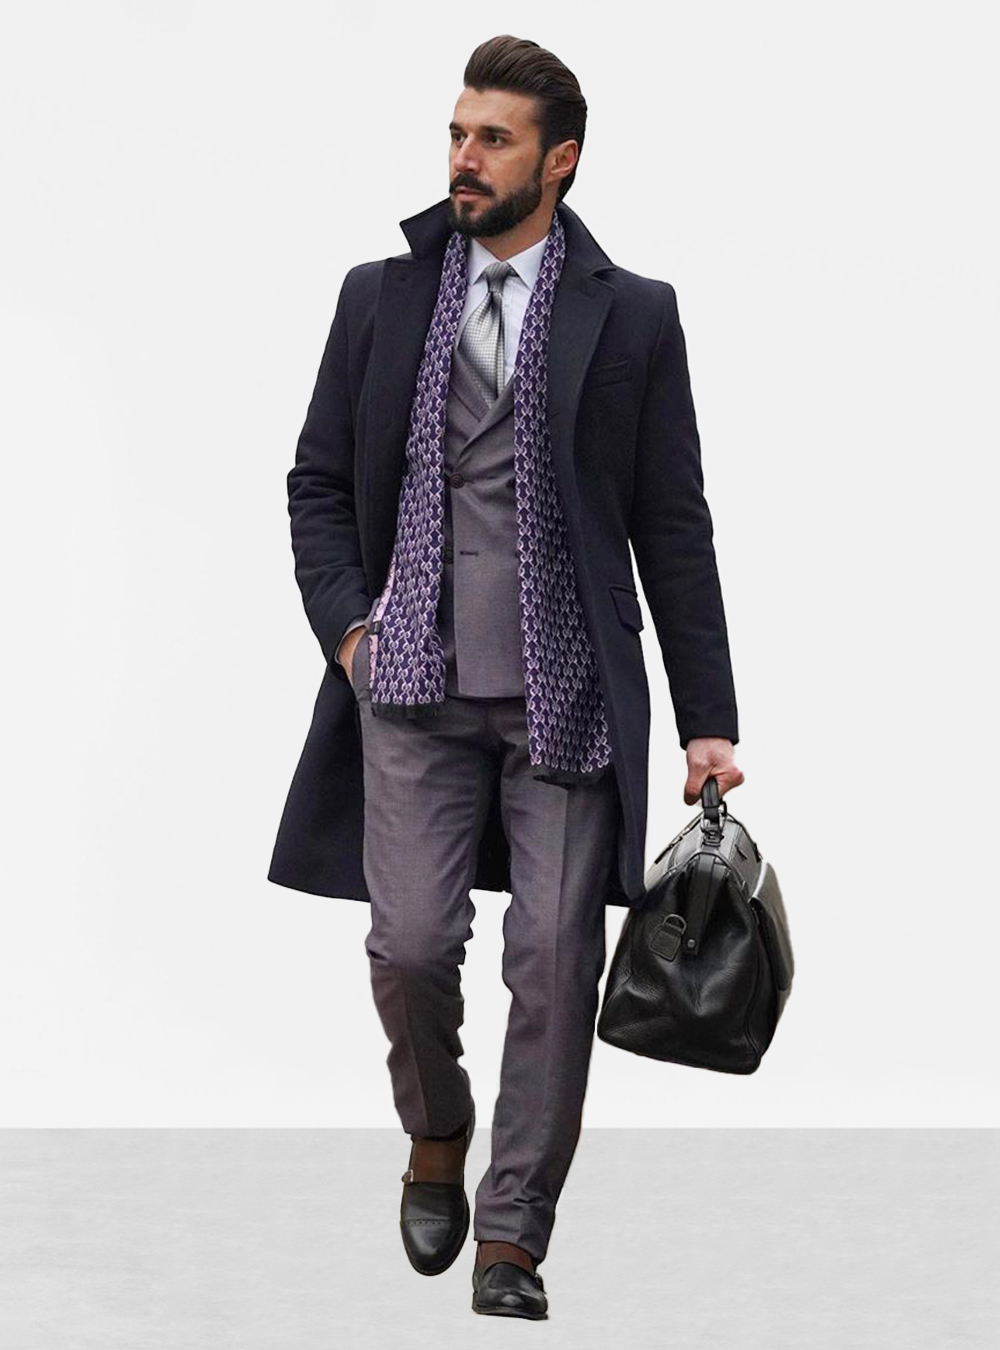 black overcoat, grey suit, and purple plaid scarf